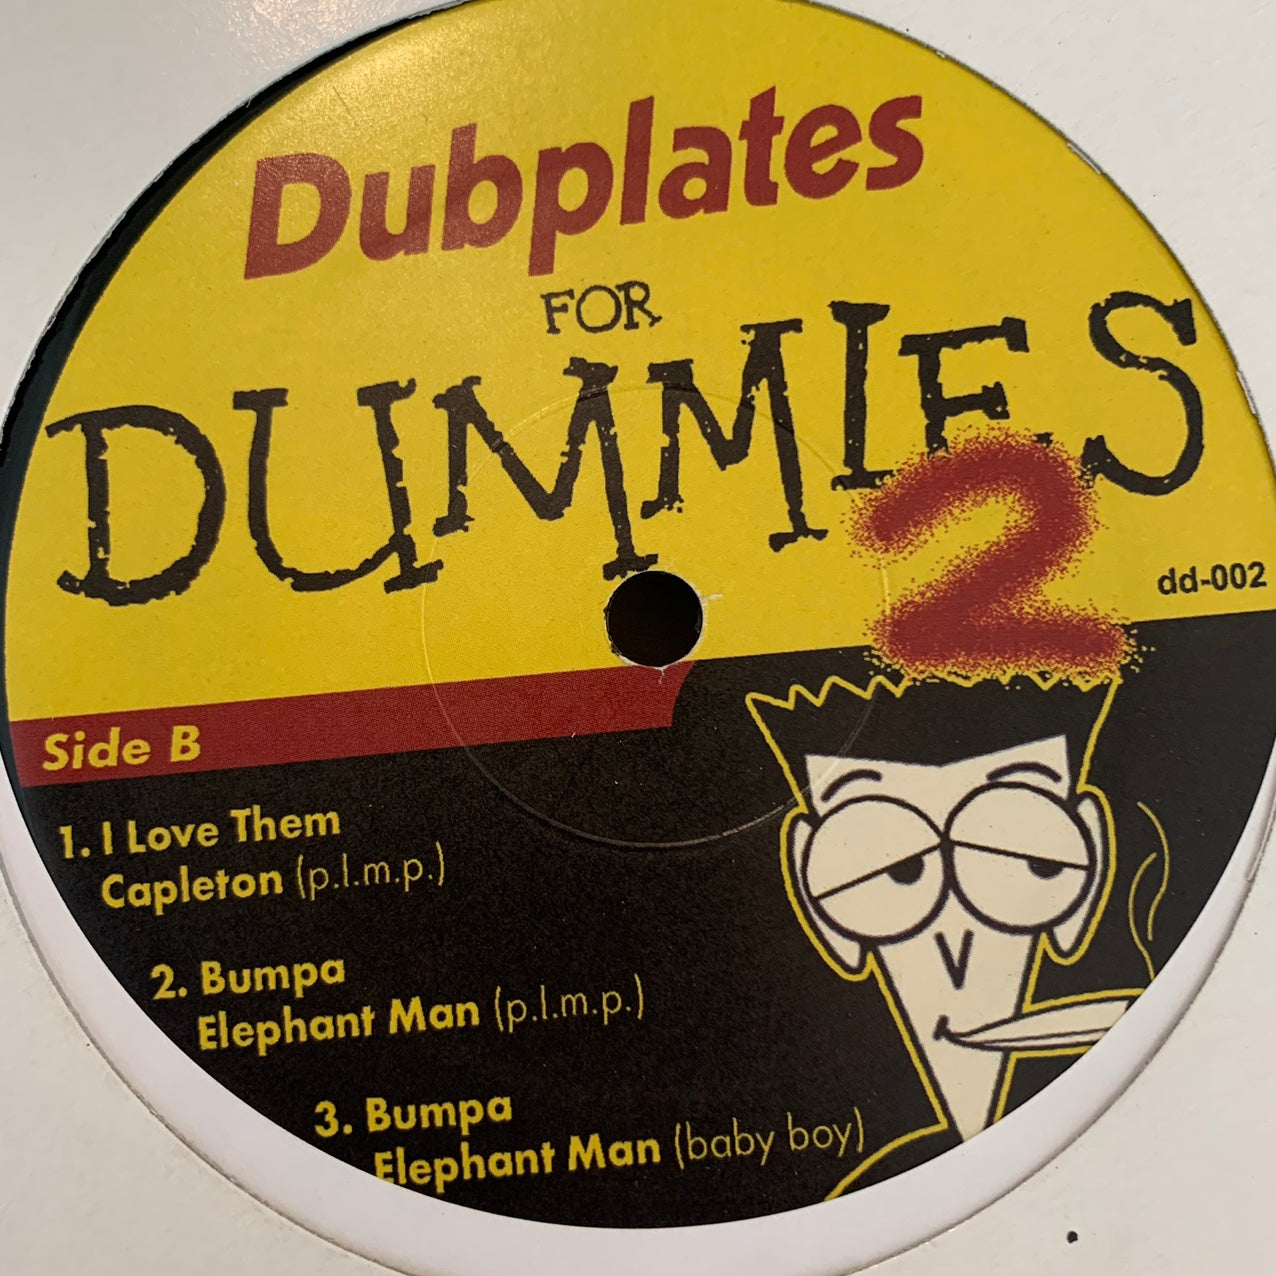 Dubplates for Dummies Vol 2 Featuring Na, Na, Na, 112, Joe Grind, Capleton, Elephant Man and more